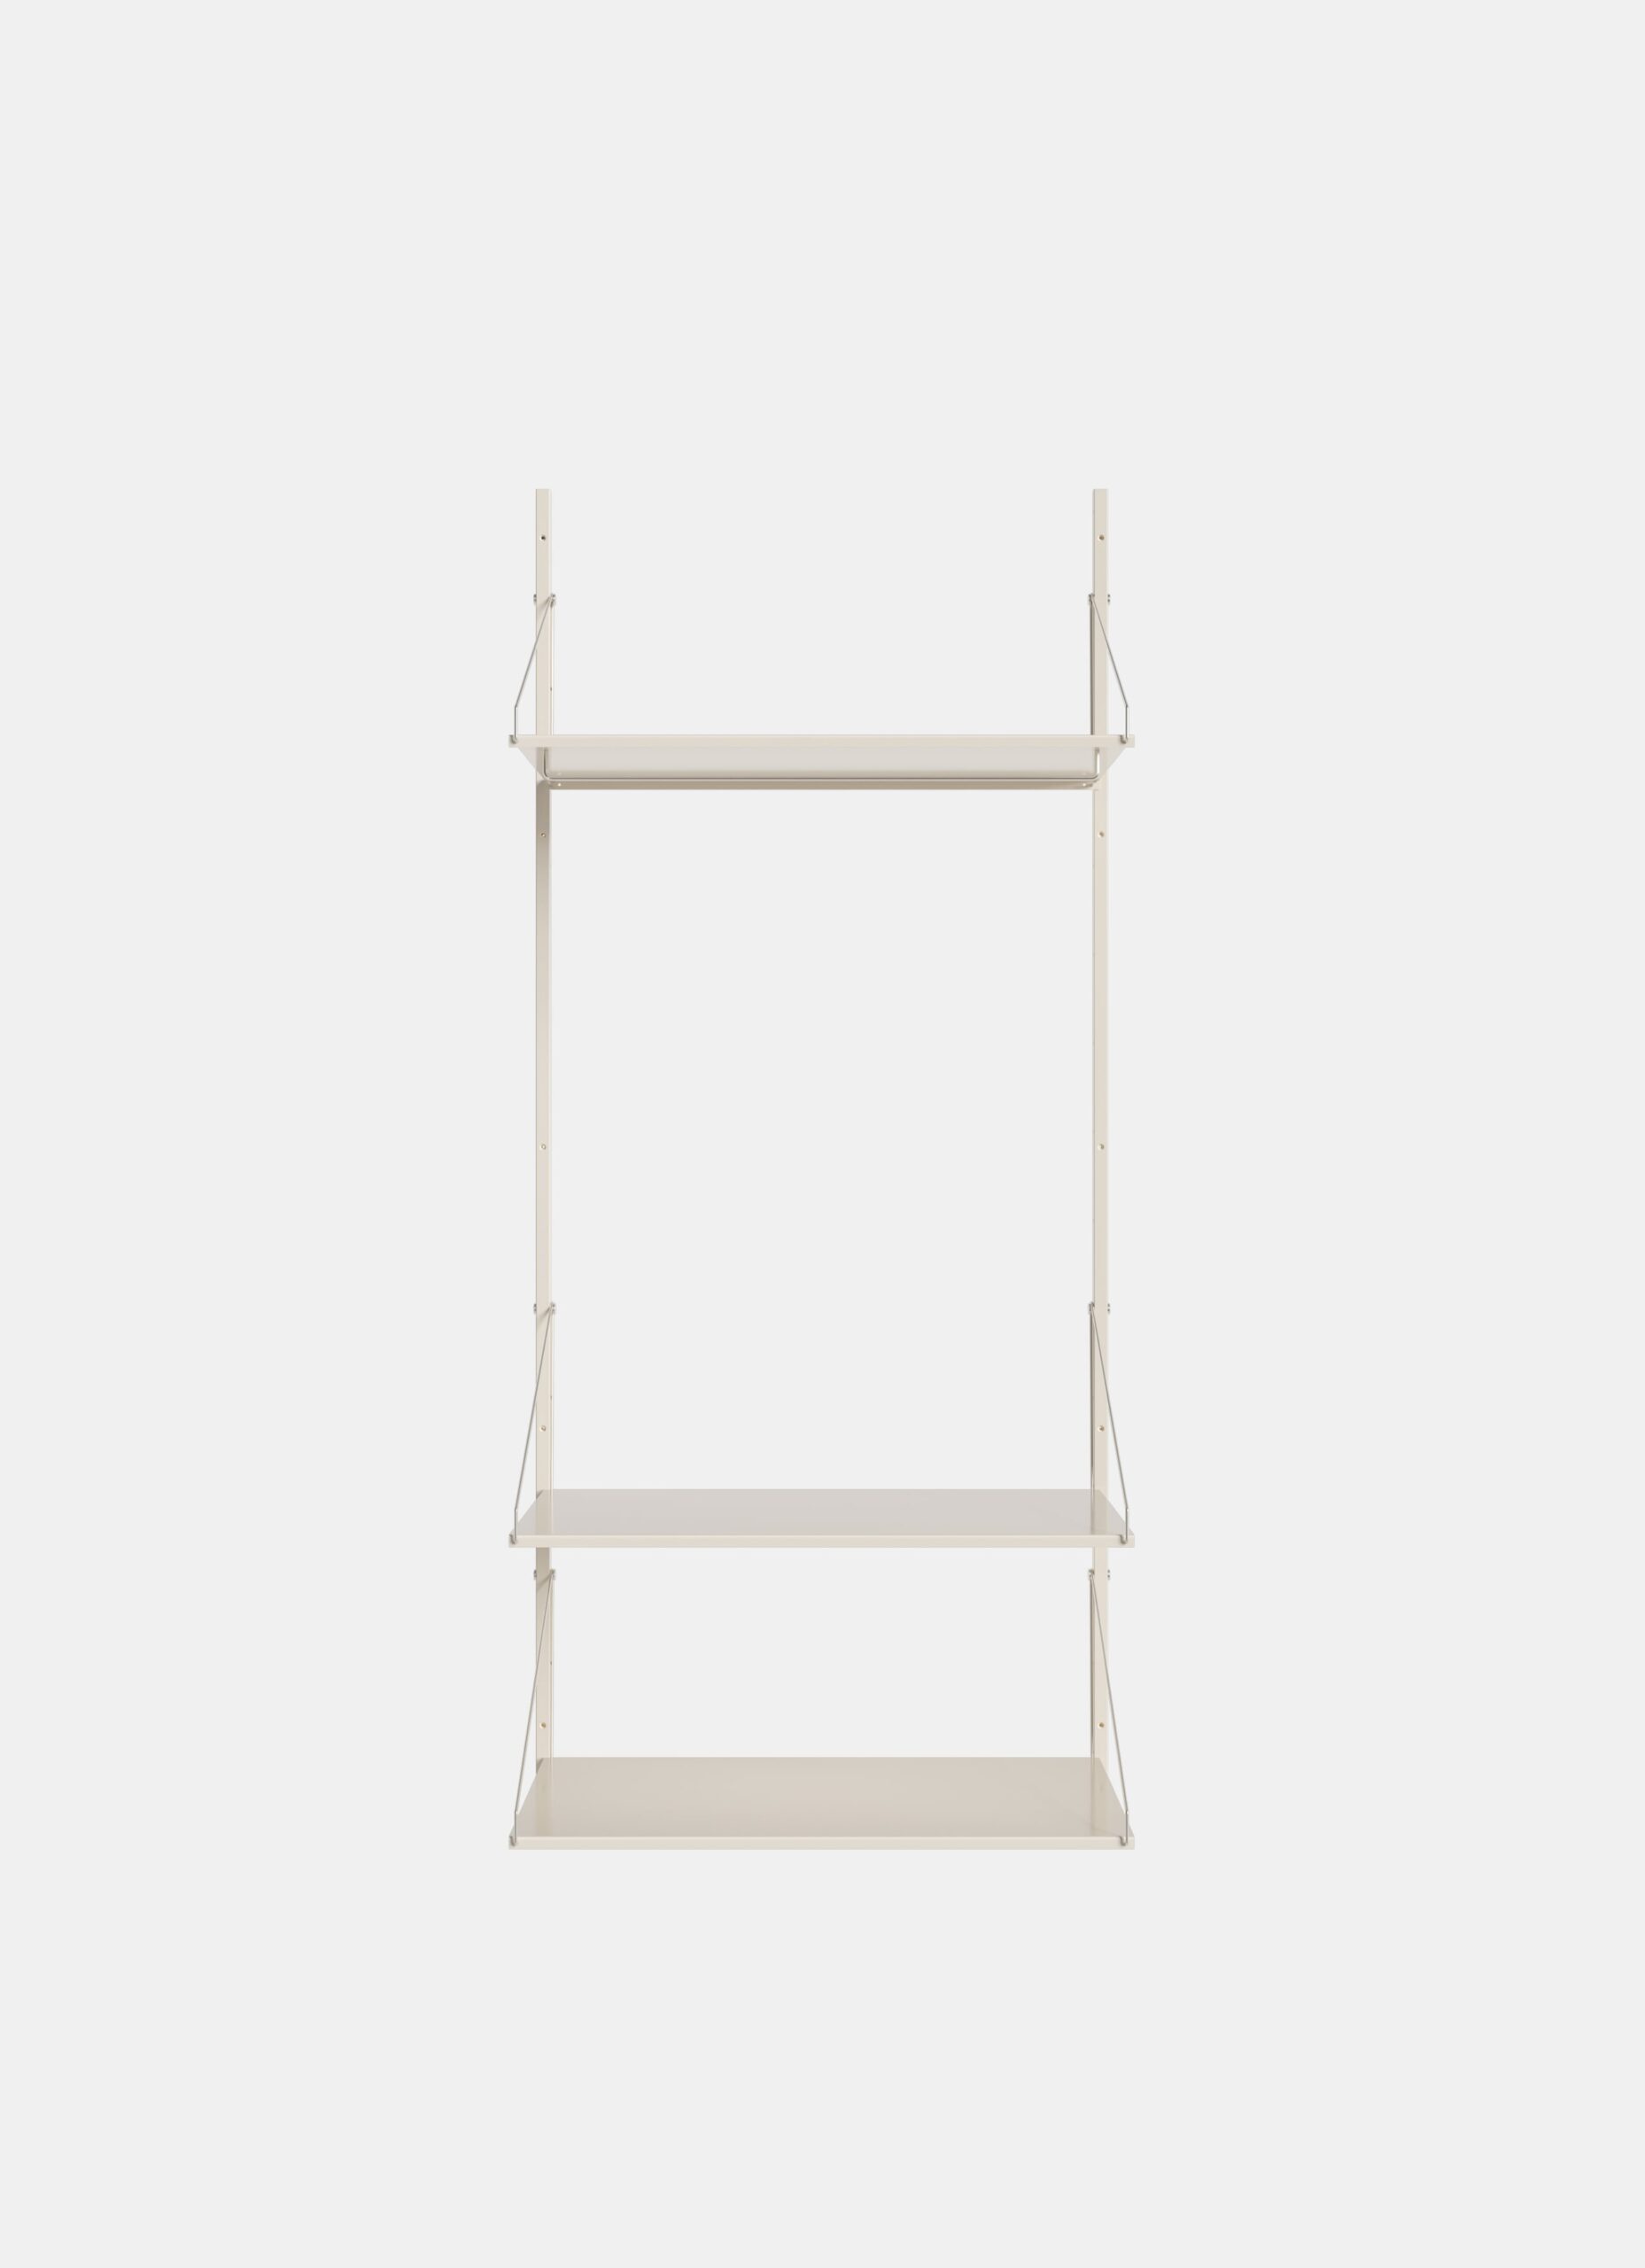 Frama - Shelf Library - Warm White Steel - H1852/W80 - Hanger Section